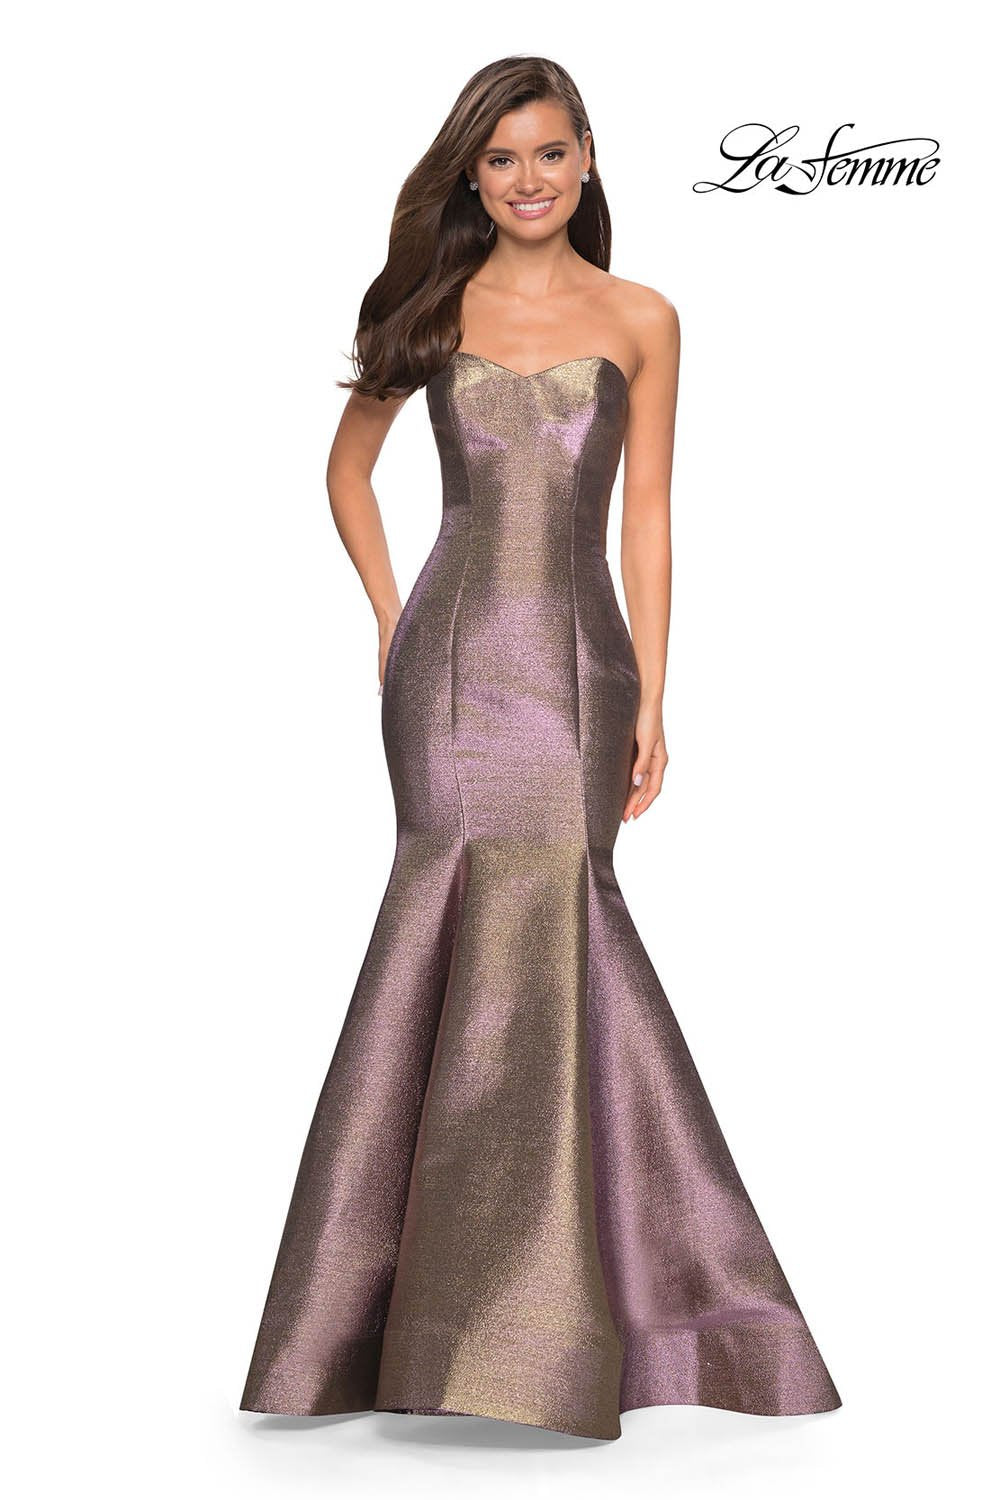 La Femme 27638 dress images in these colors: Purple Gold.